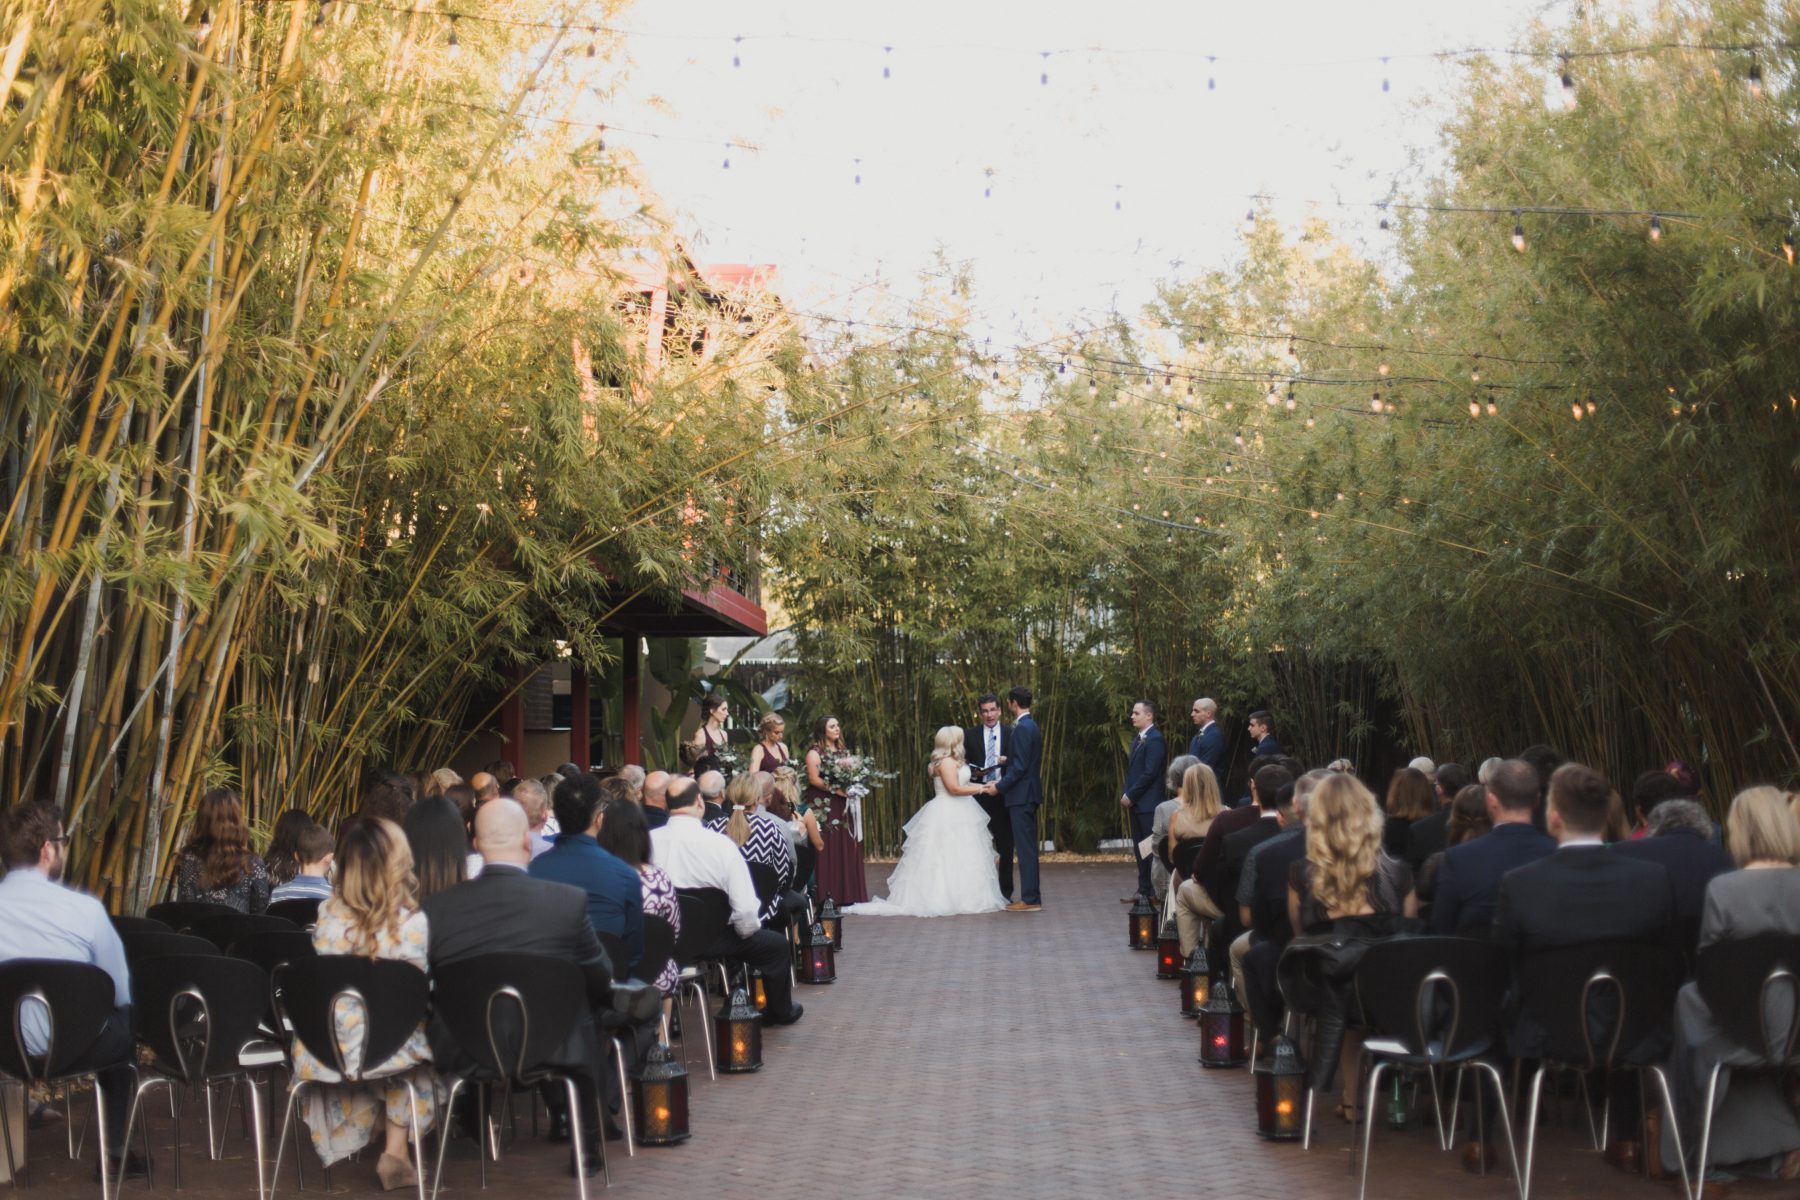 Bamboo garden wedding ceremony under string lights | Florida Winter Wedding at NOVA 535